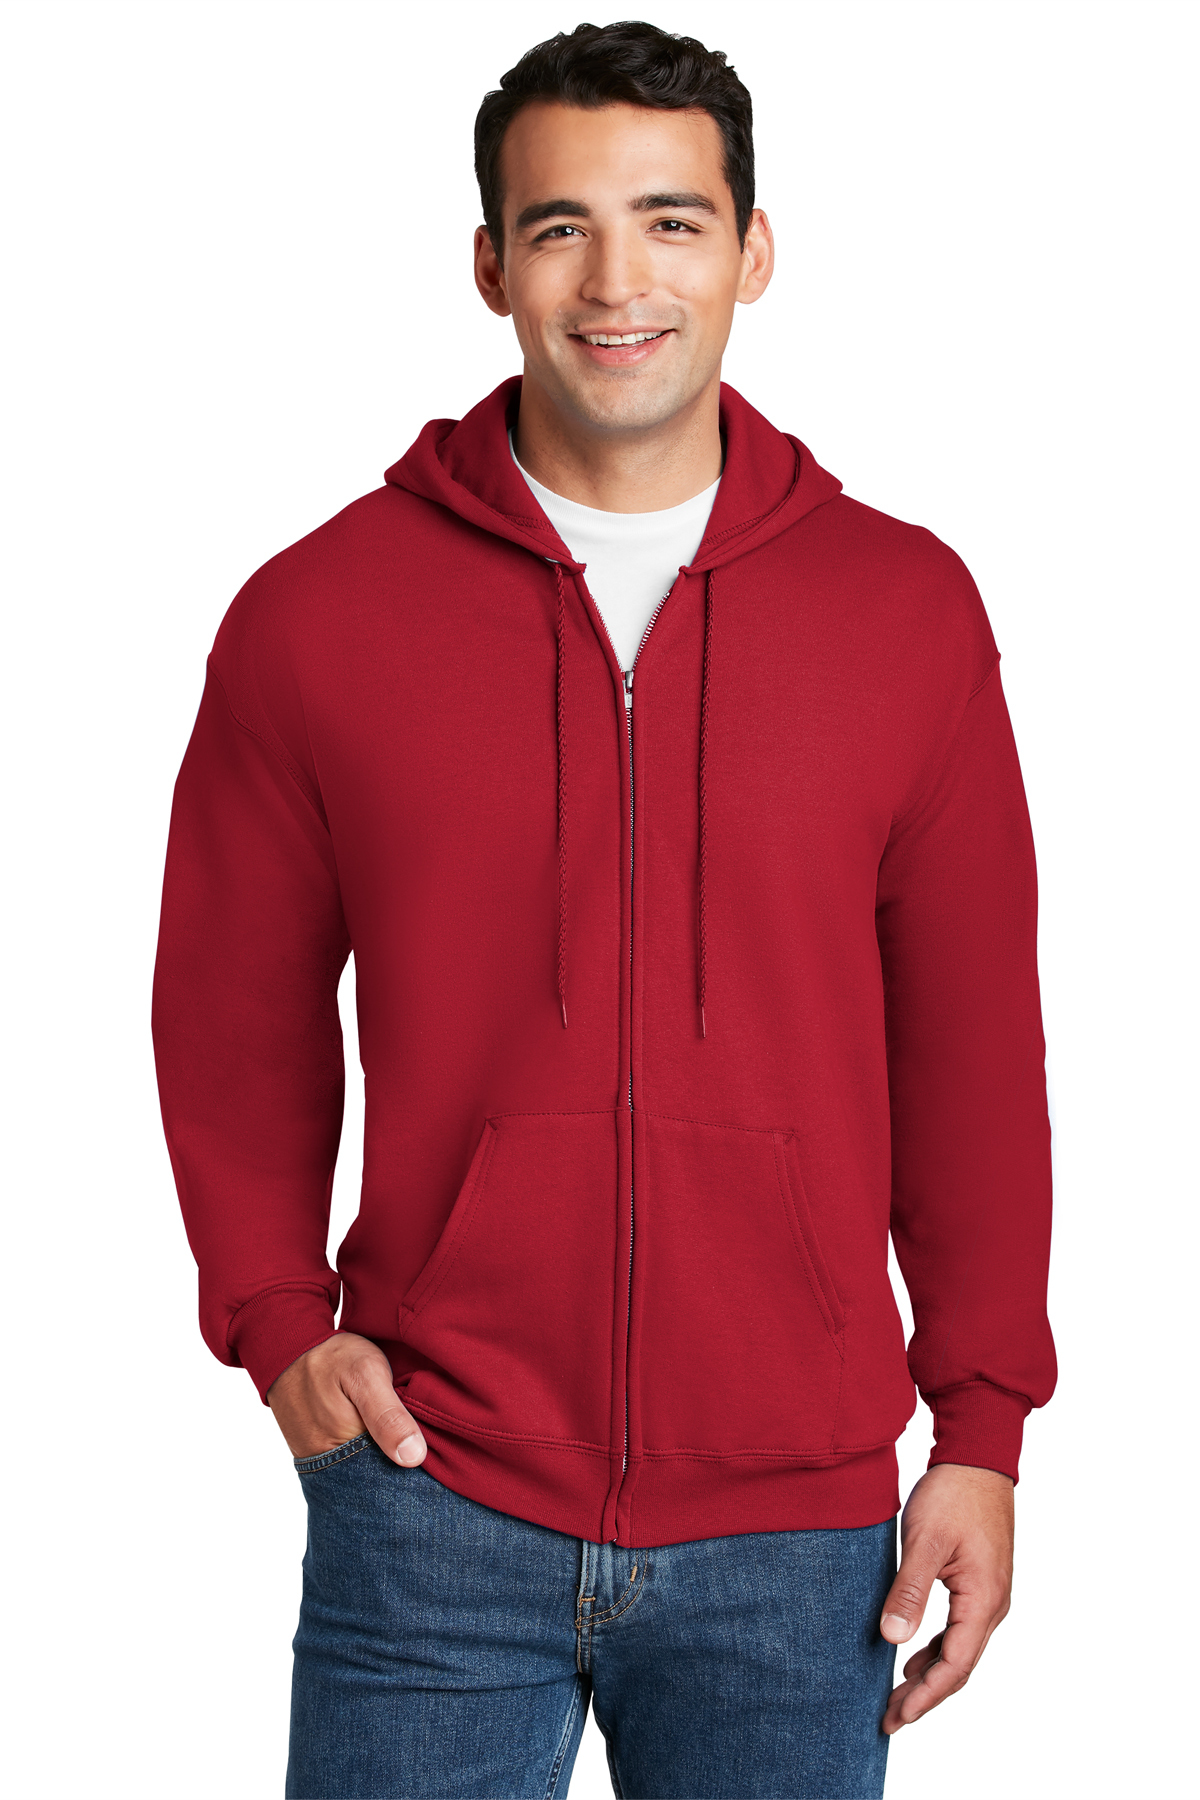 Hanes Ultimate Cotton - Full-Zip Hooded Sweatshirt, Product